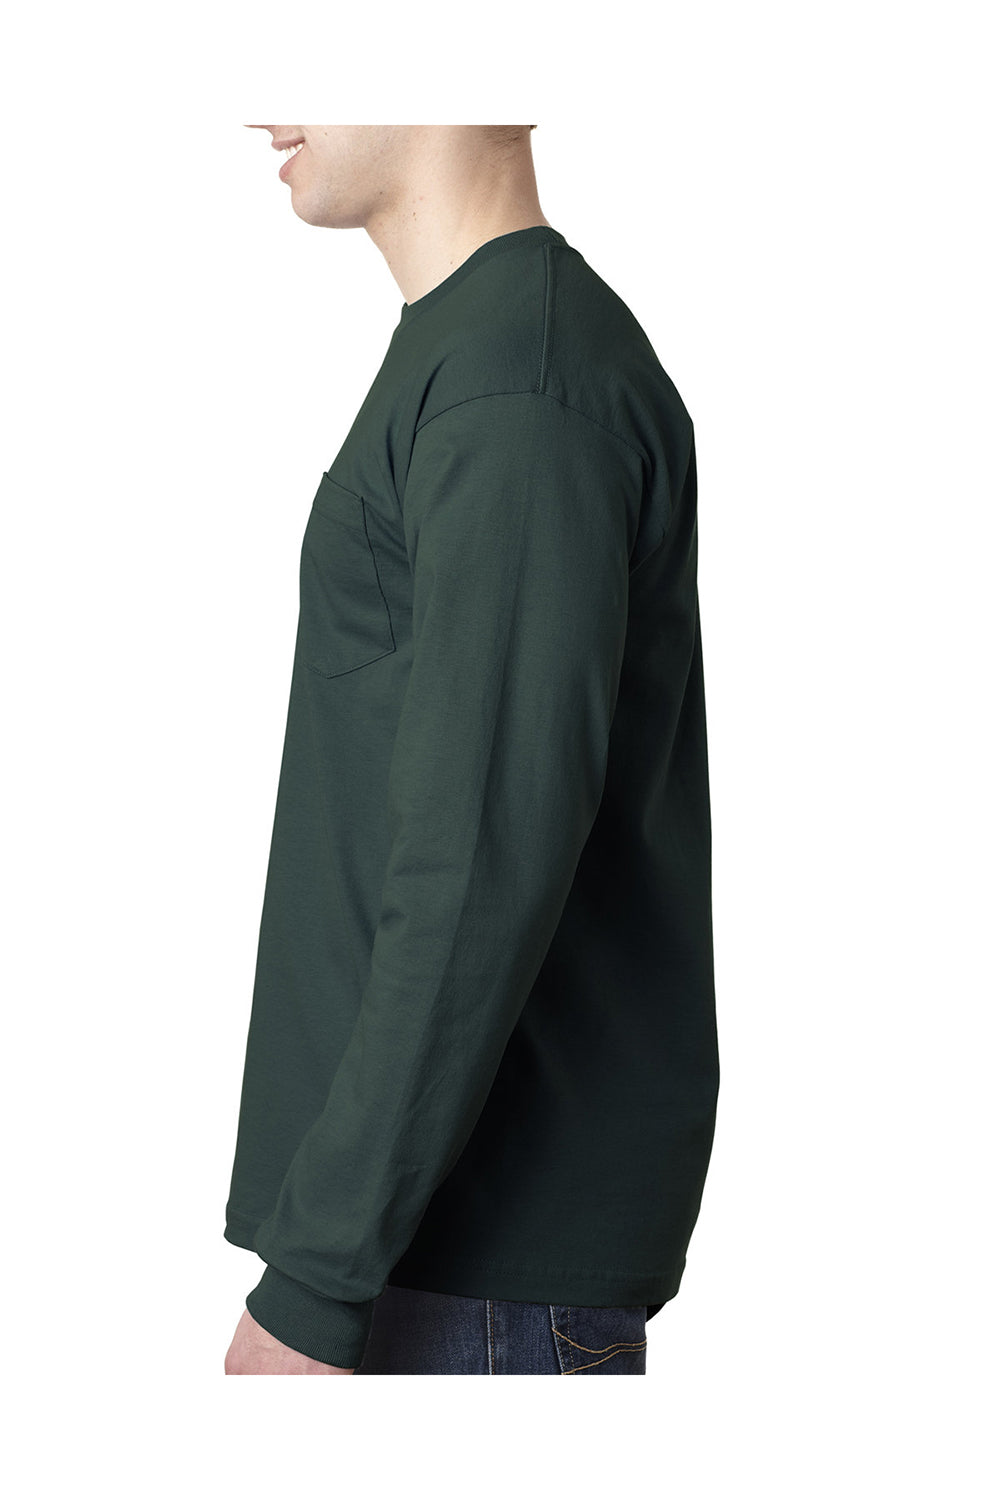 Bayside BA8100 Mens USA Made Long Sleeve Crewneck T-Shirt w/ Pocket Forest Green Model Side